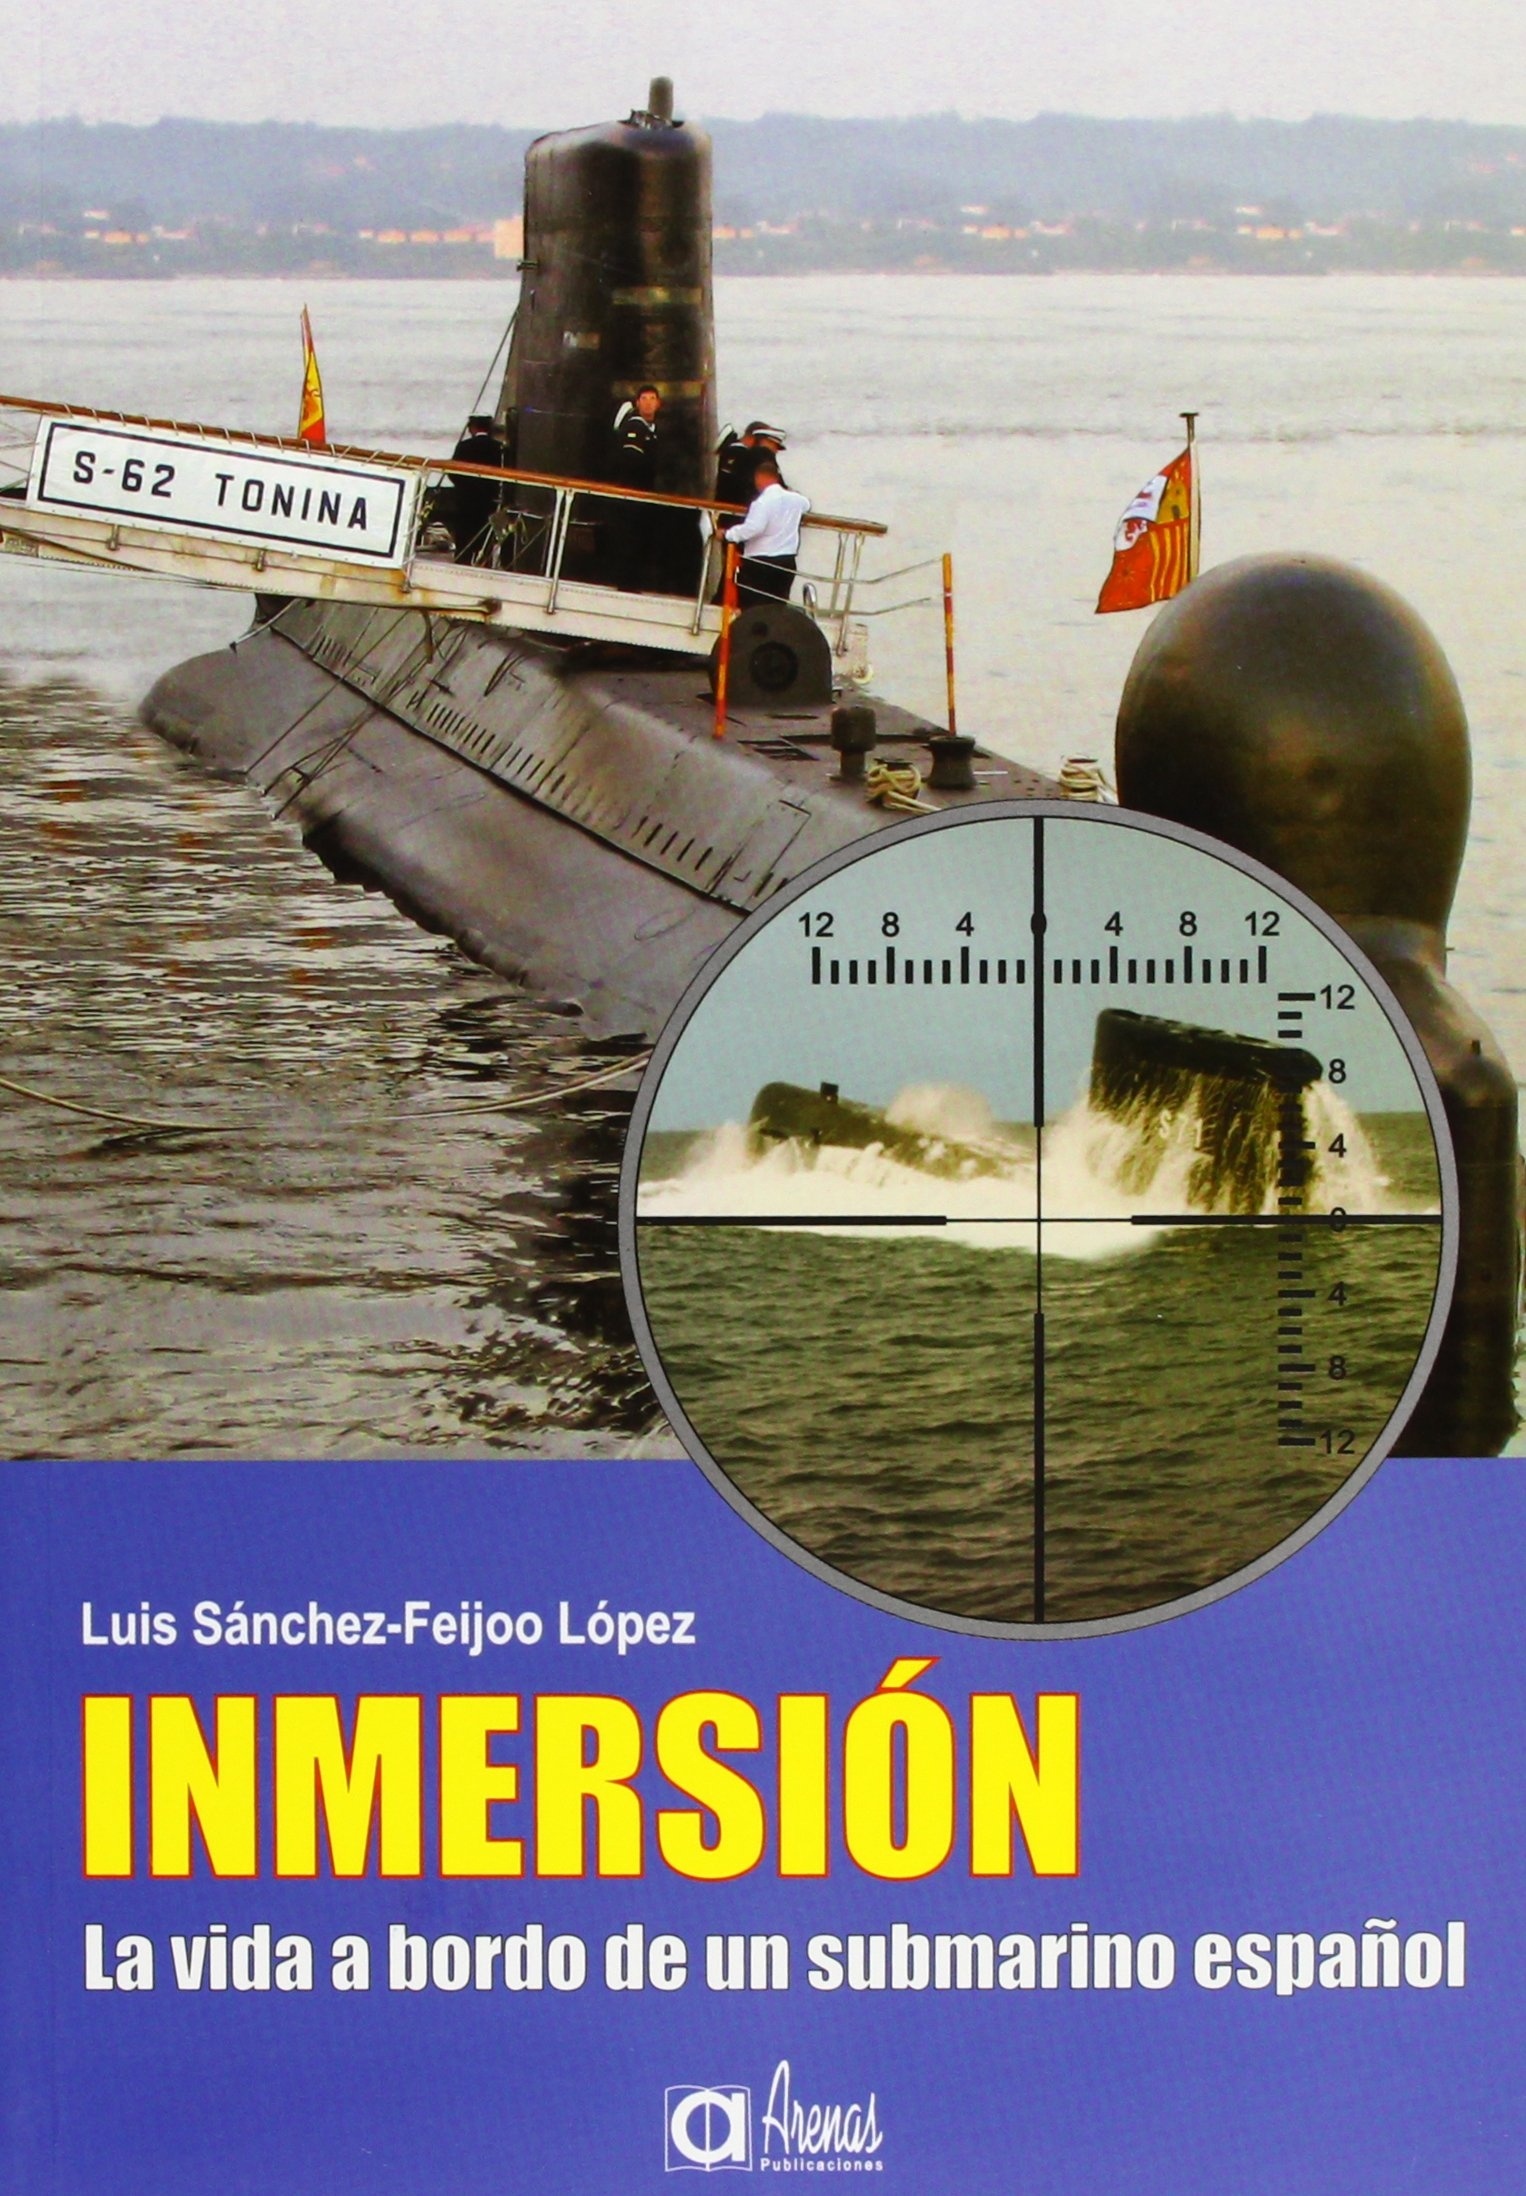 Inmersión "La vida a bordo de un submarino español"